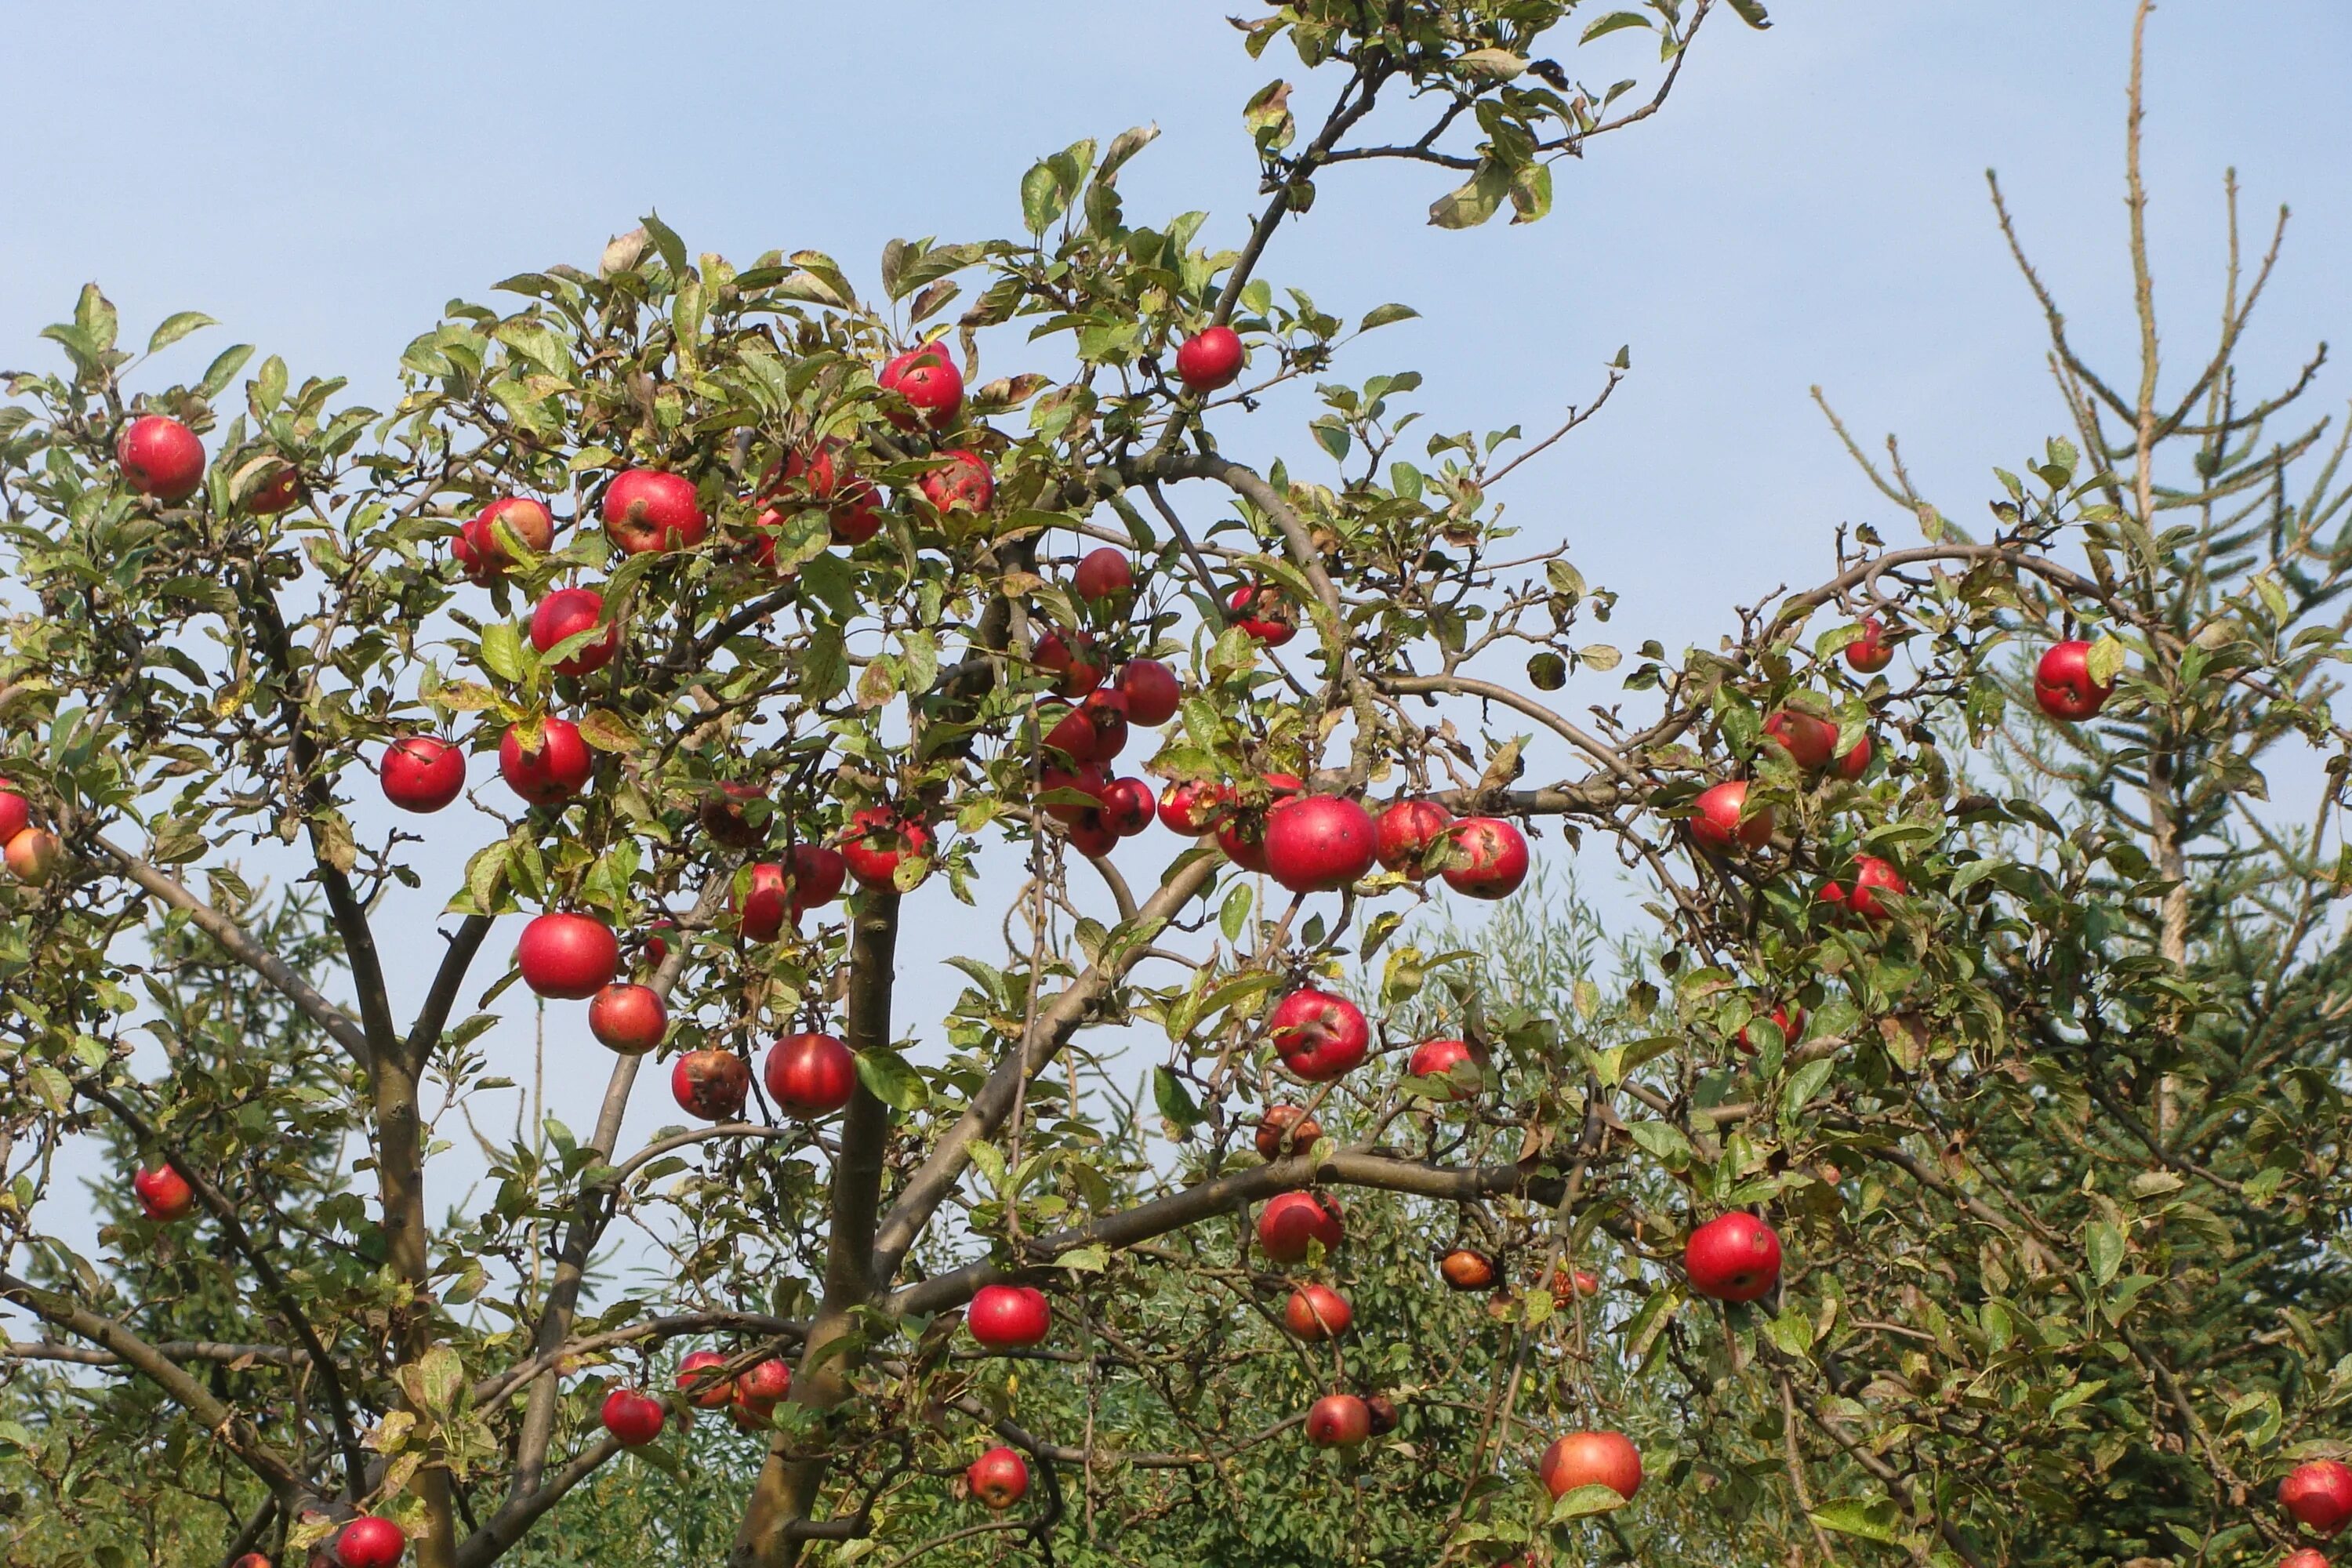 В саду где растут яблоки. Плод яблони. Яблоня плодовая. Яблоня дерево с плодами. Яблоня Кримсон Голд.